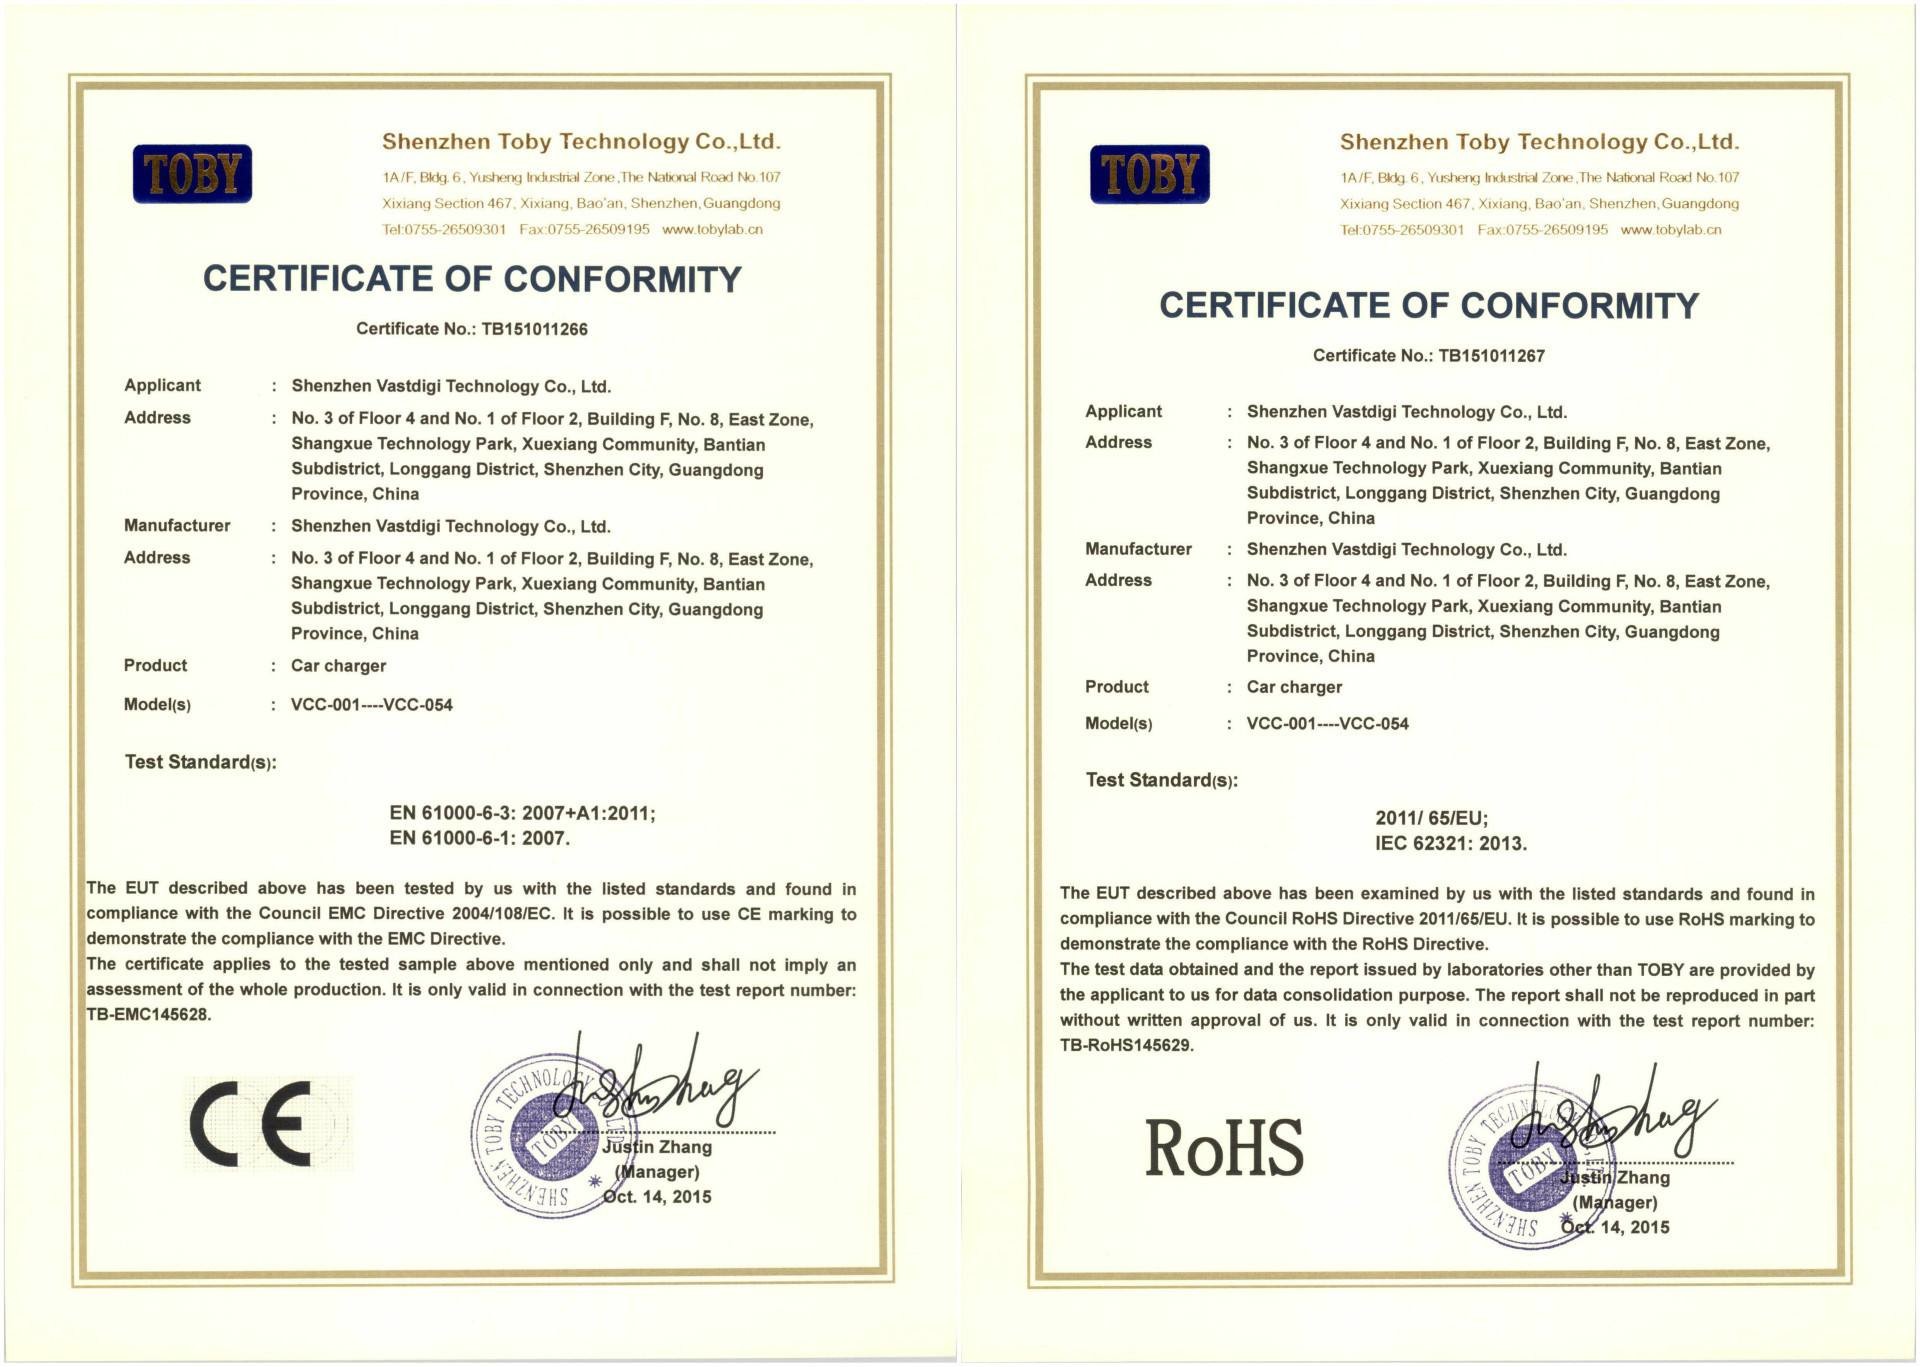 Chine Xiamen Sincery Im.&amp; Ex. Co., Ltd. Certifications